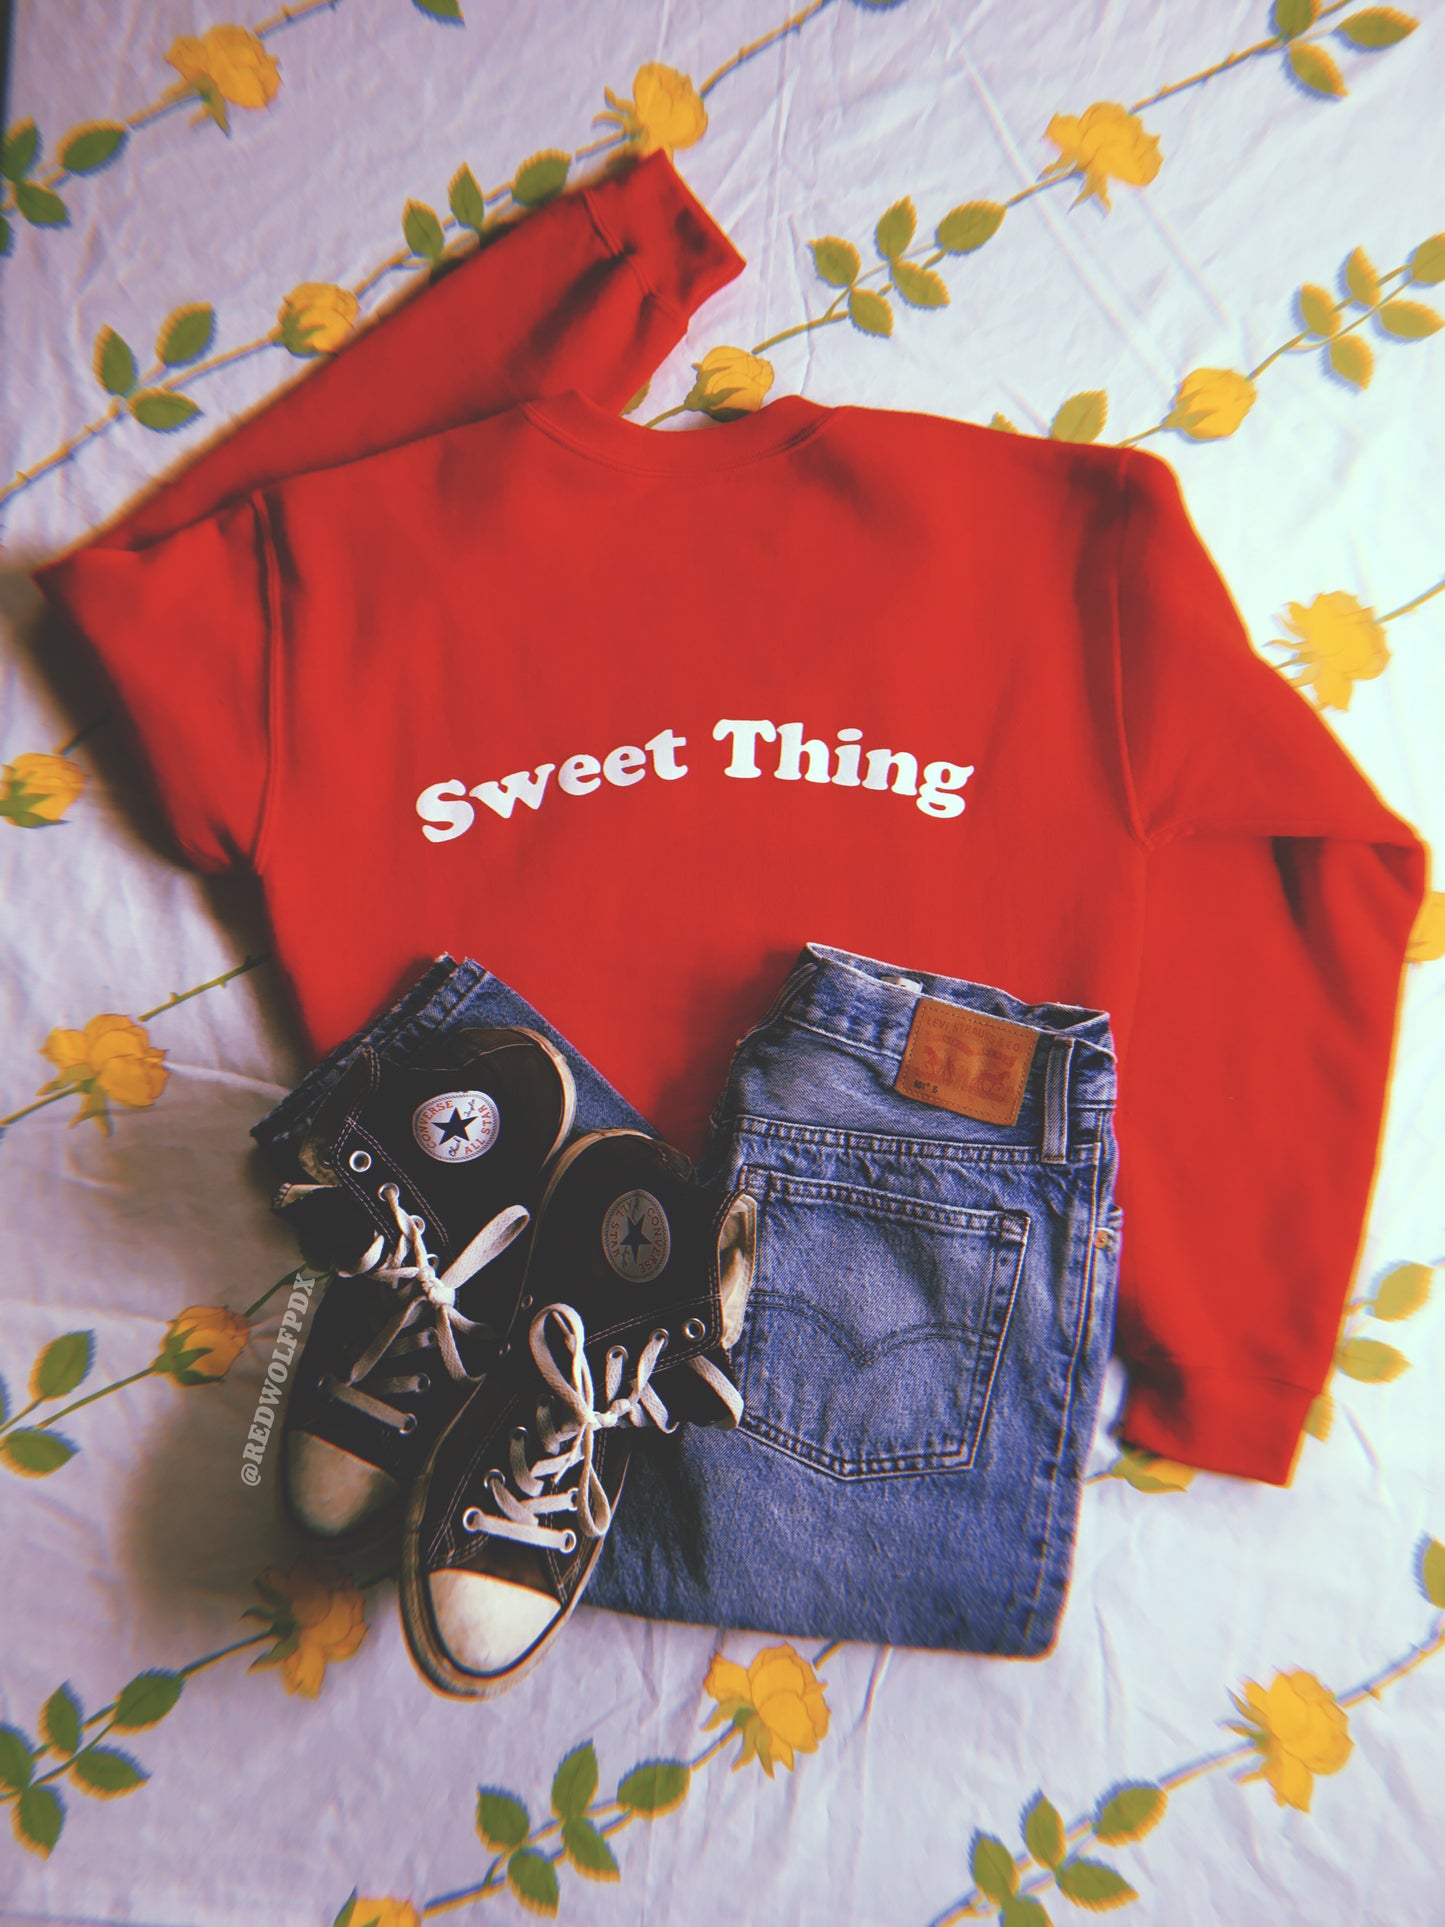  sweatshirt - Sweet Thing Sweatshirt - REDWOLF